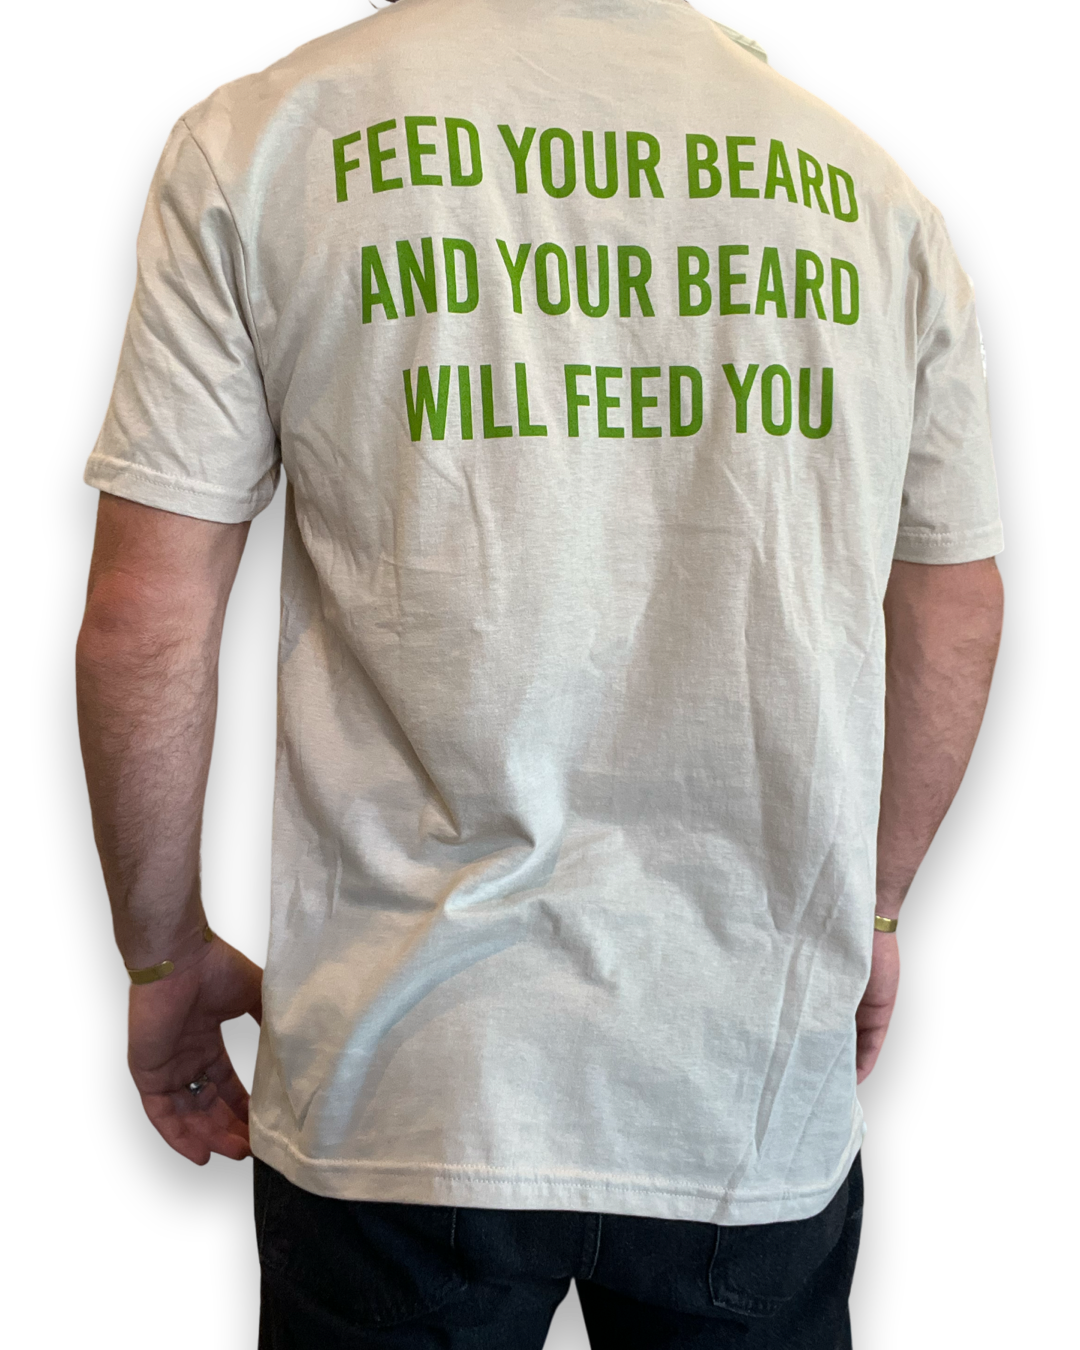 Avocado Beard Co Limited Edition T-Shirt - "FEED YOUR BEARD"